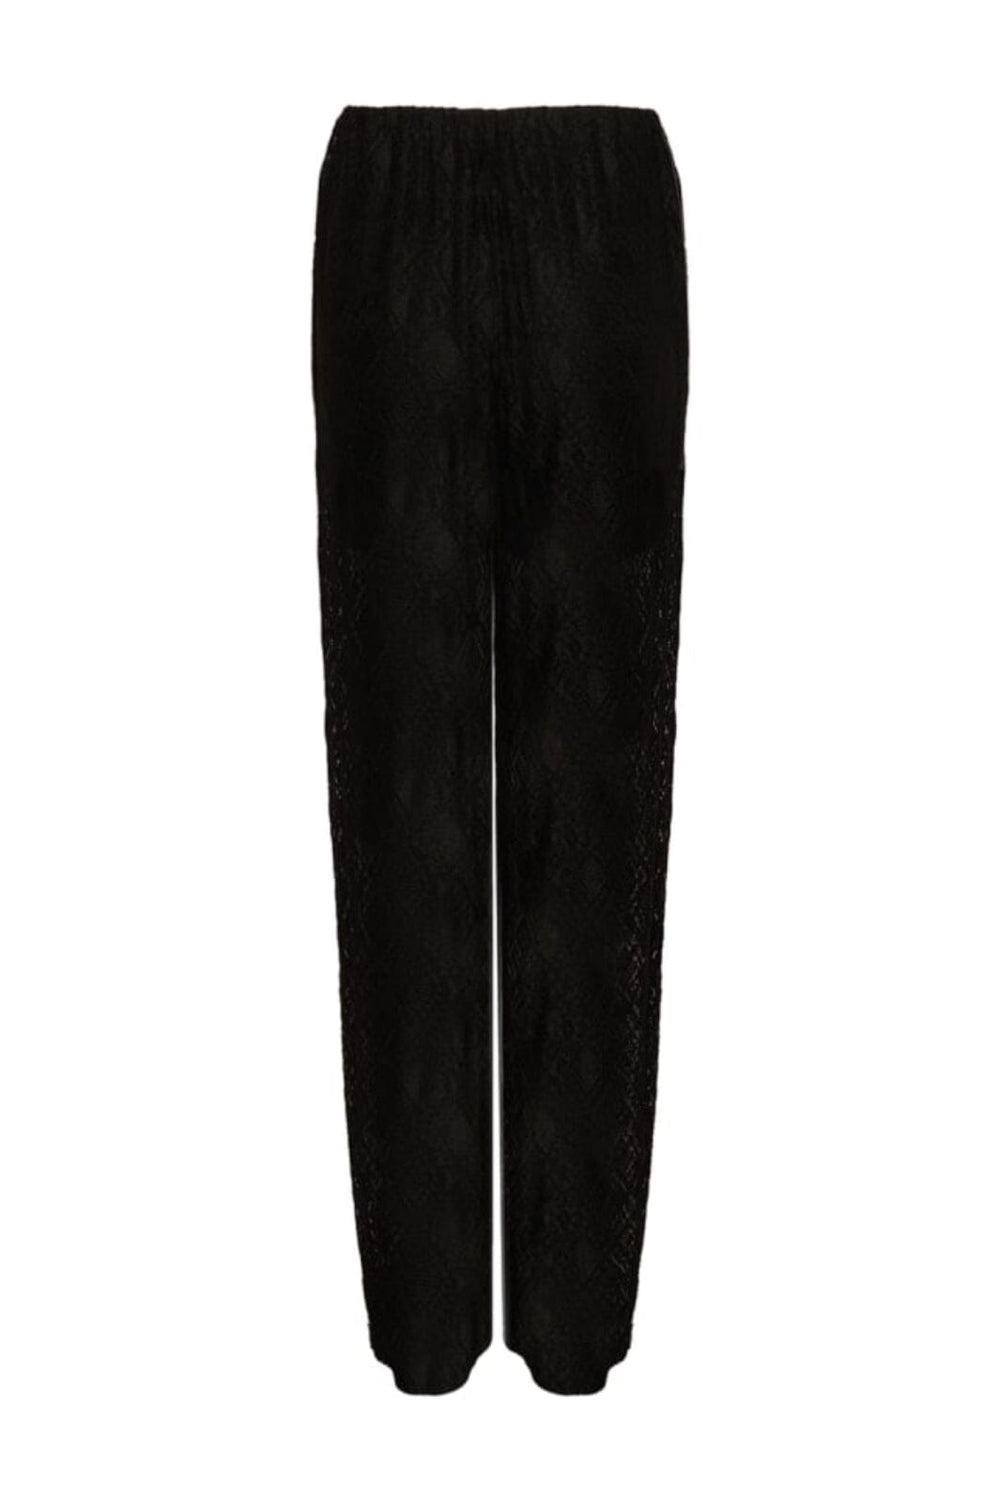 Noella - Texas Lace Pants - 004 Black Bukser 